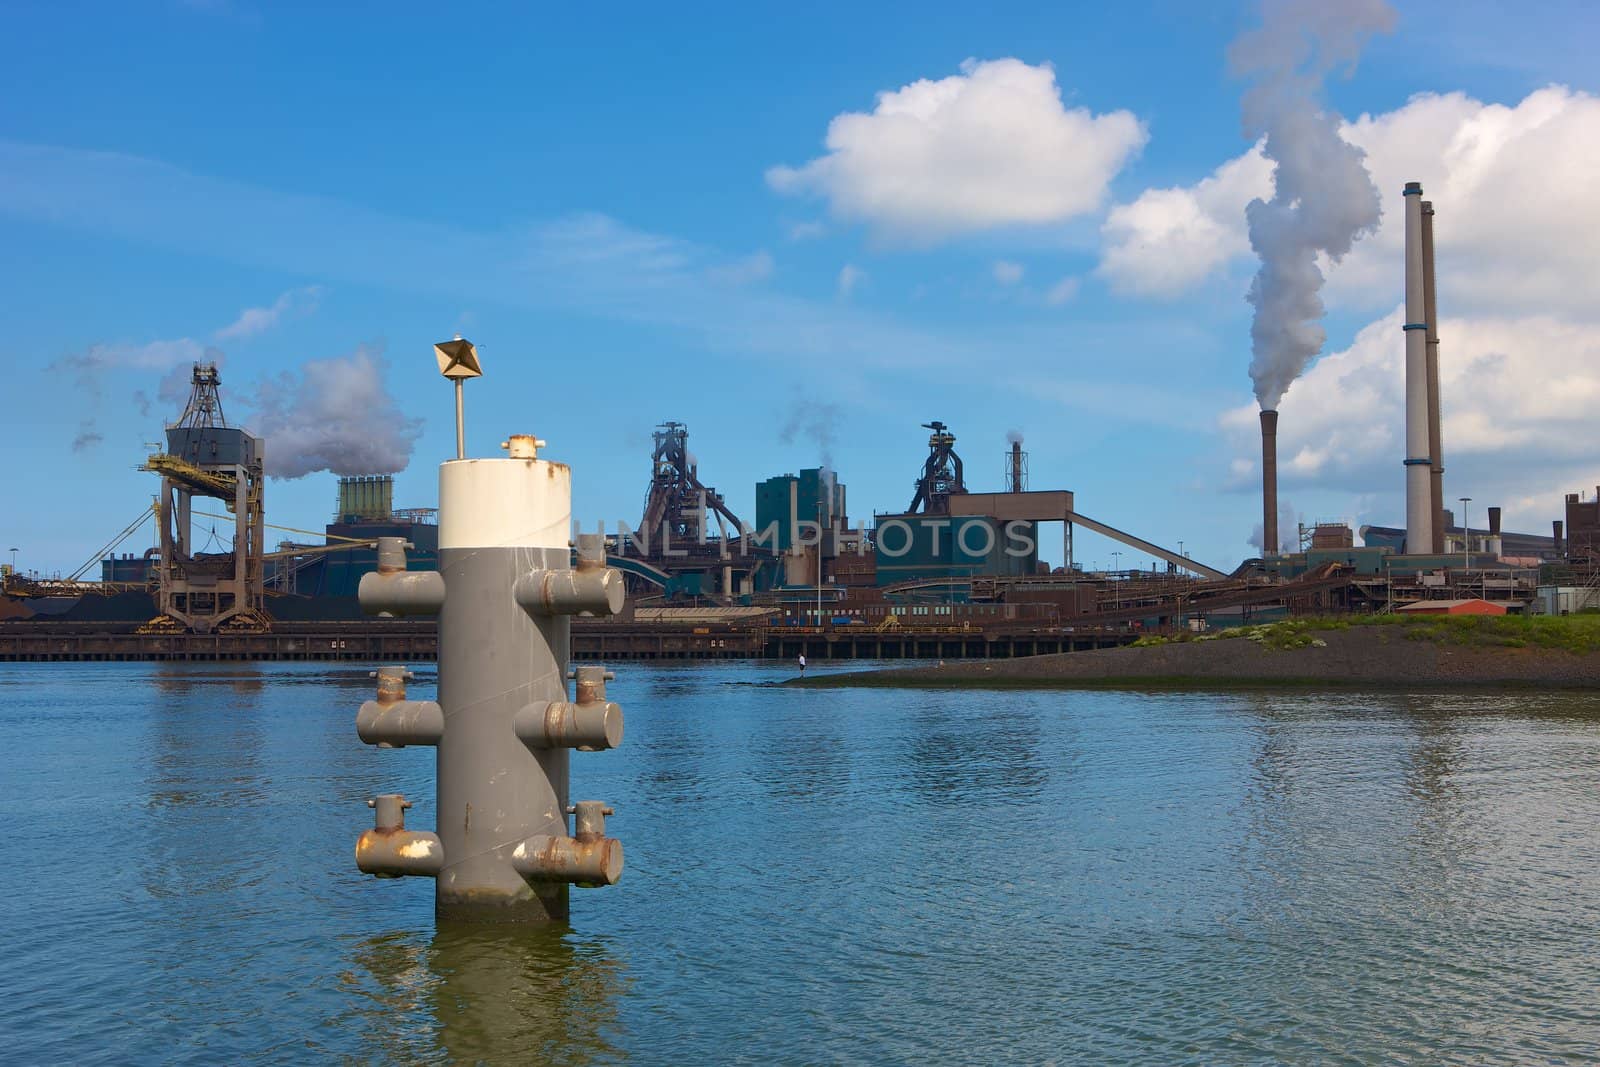 Hoogovens steel factory in IJmuiden-Velsen, Netherlands